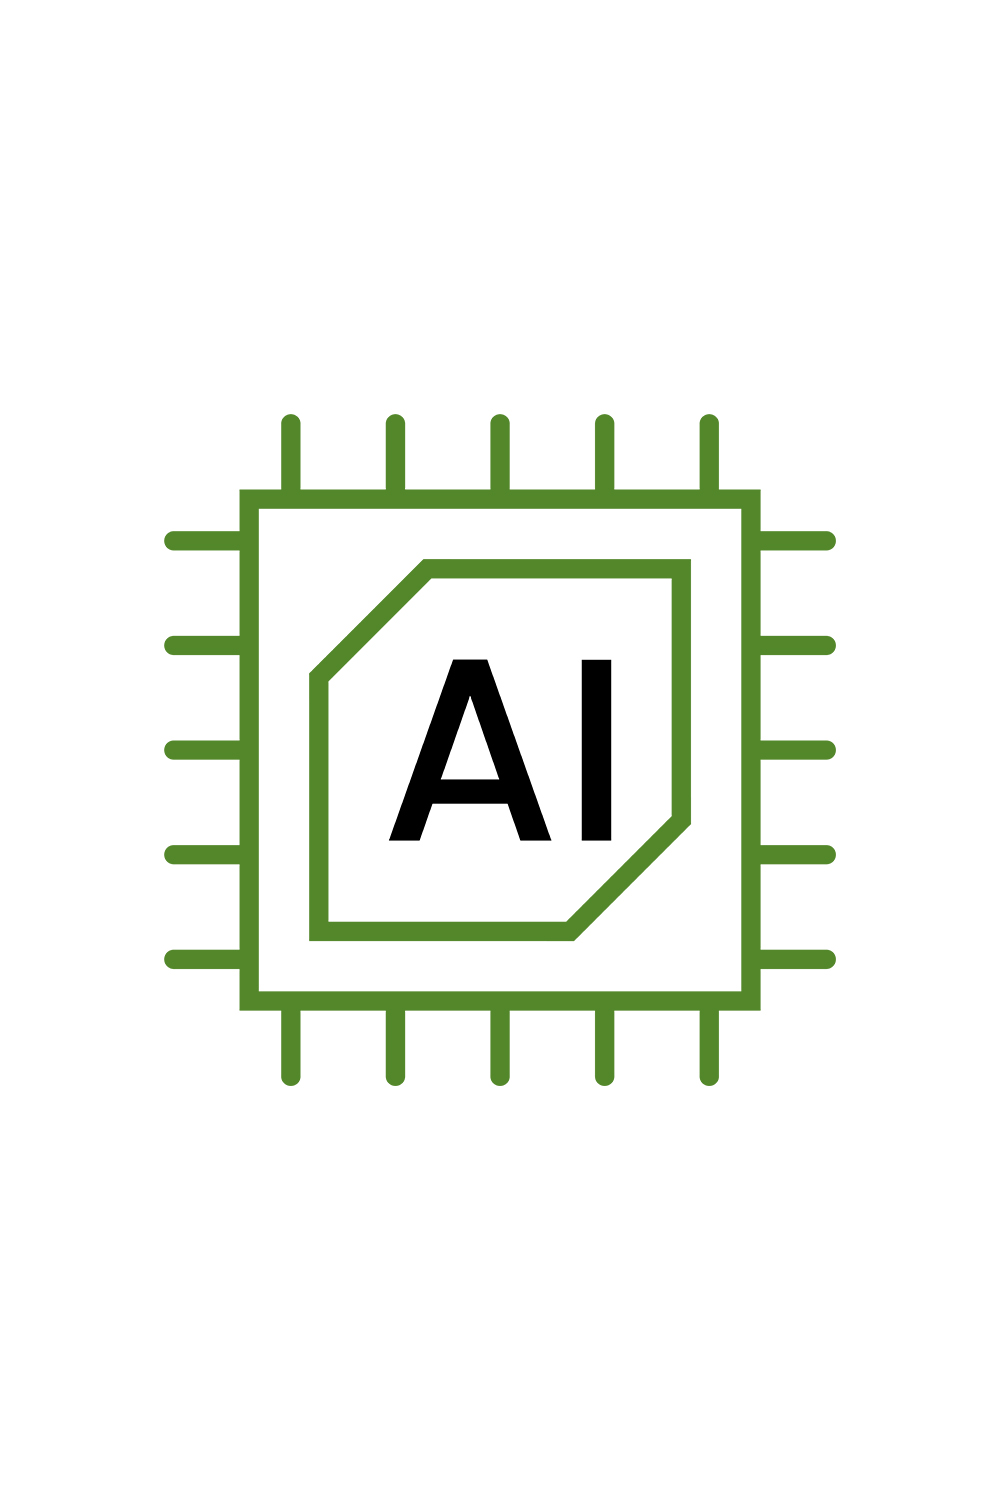 AI Minimal Tech Chip Logo Template pinterest preview image.